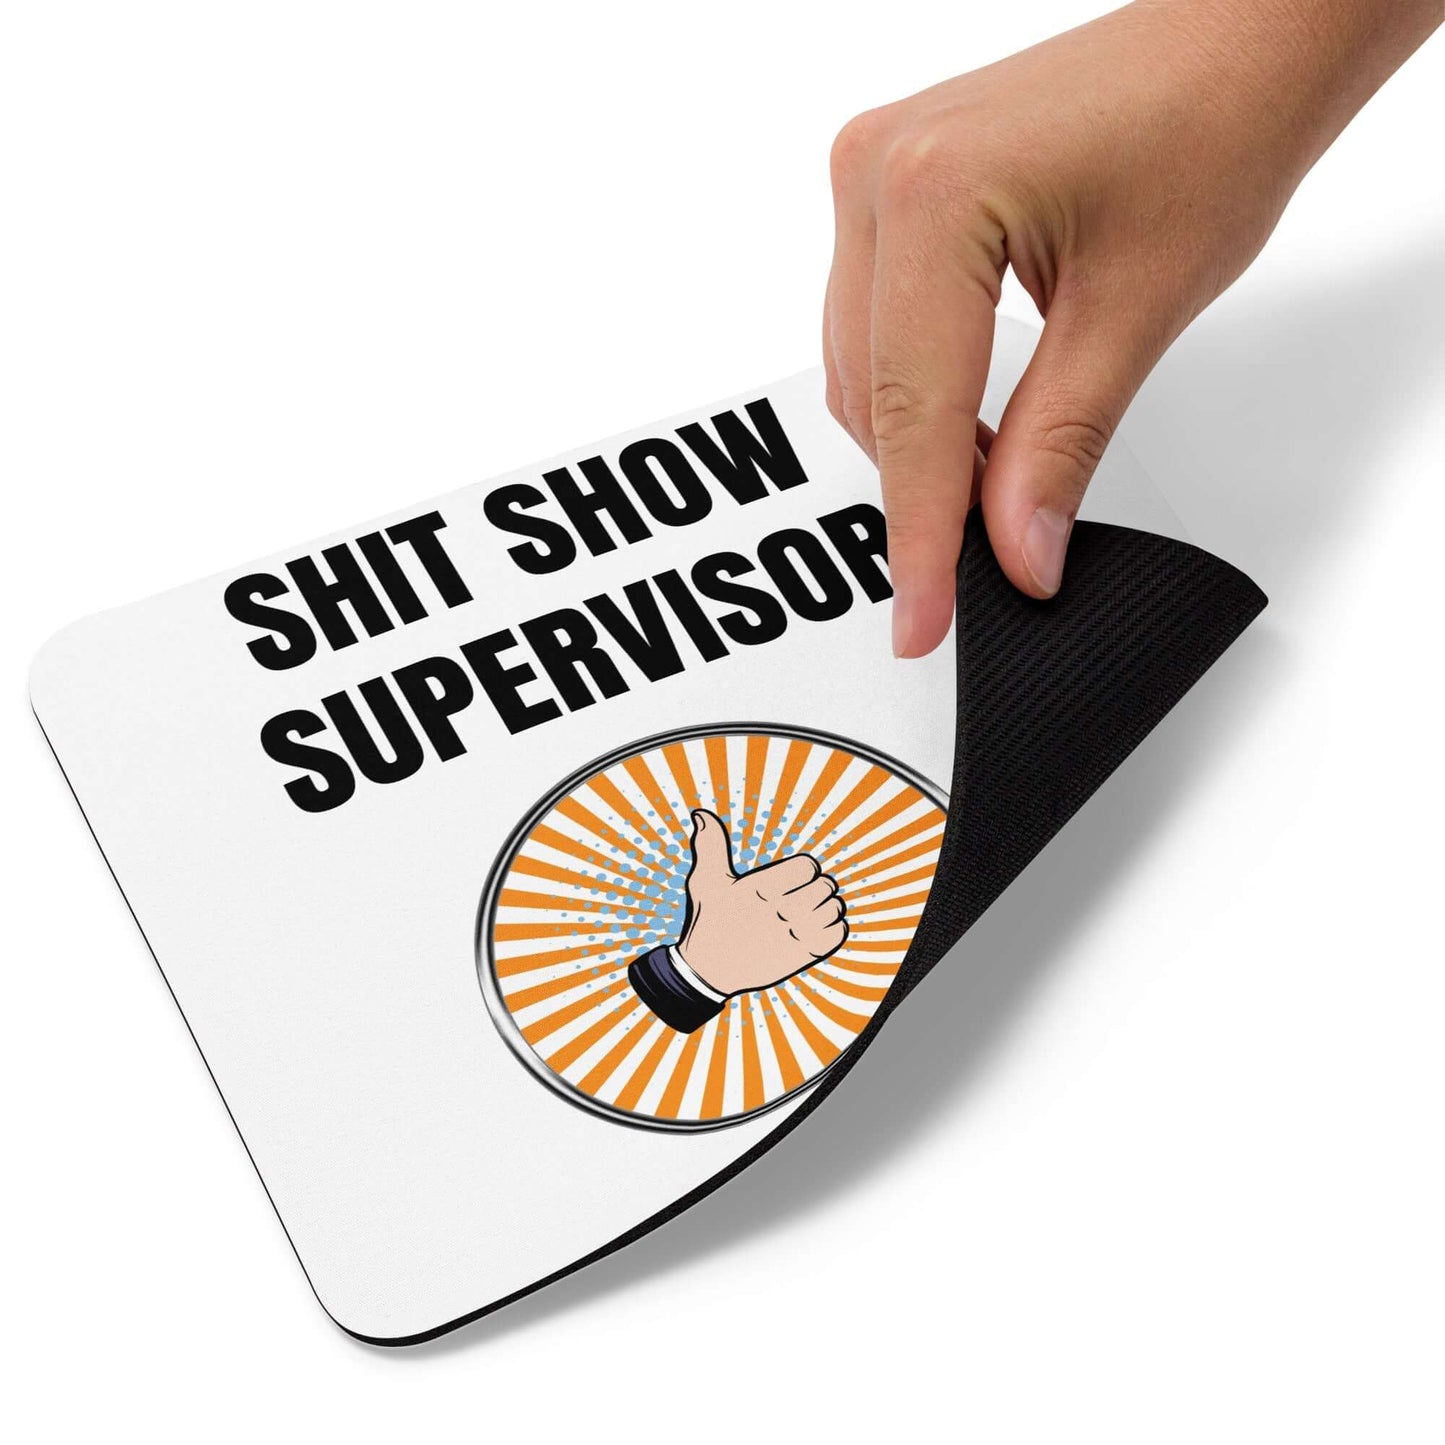 S#it show supervisor - Mouse pad - Horrible Designs